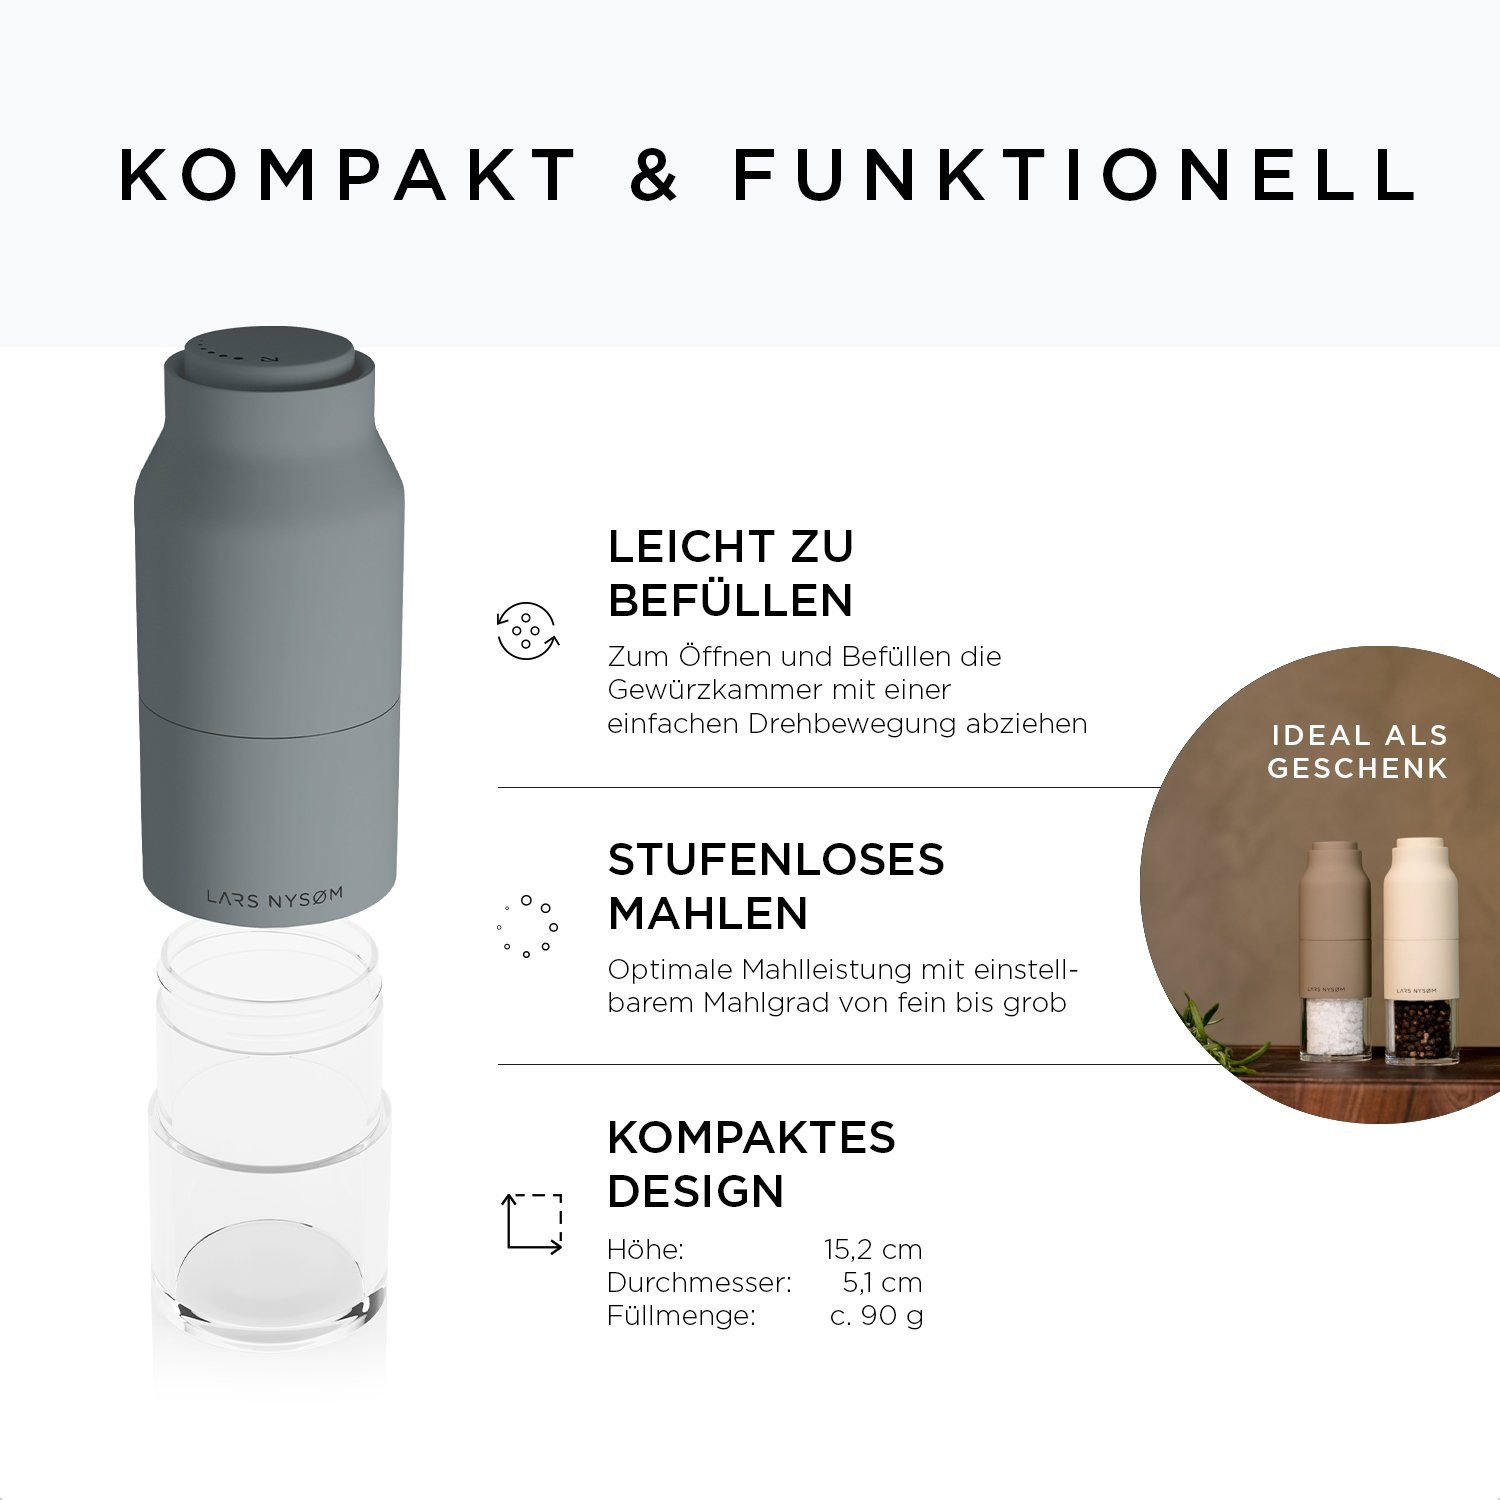 Cool Salz-/Pfeffermühle mit Grey NYSØM Keramik-Mahlwerk Omvendt LARS Manuell, einstellbarem